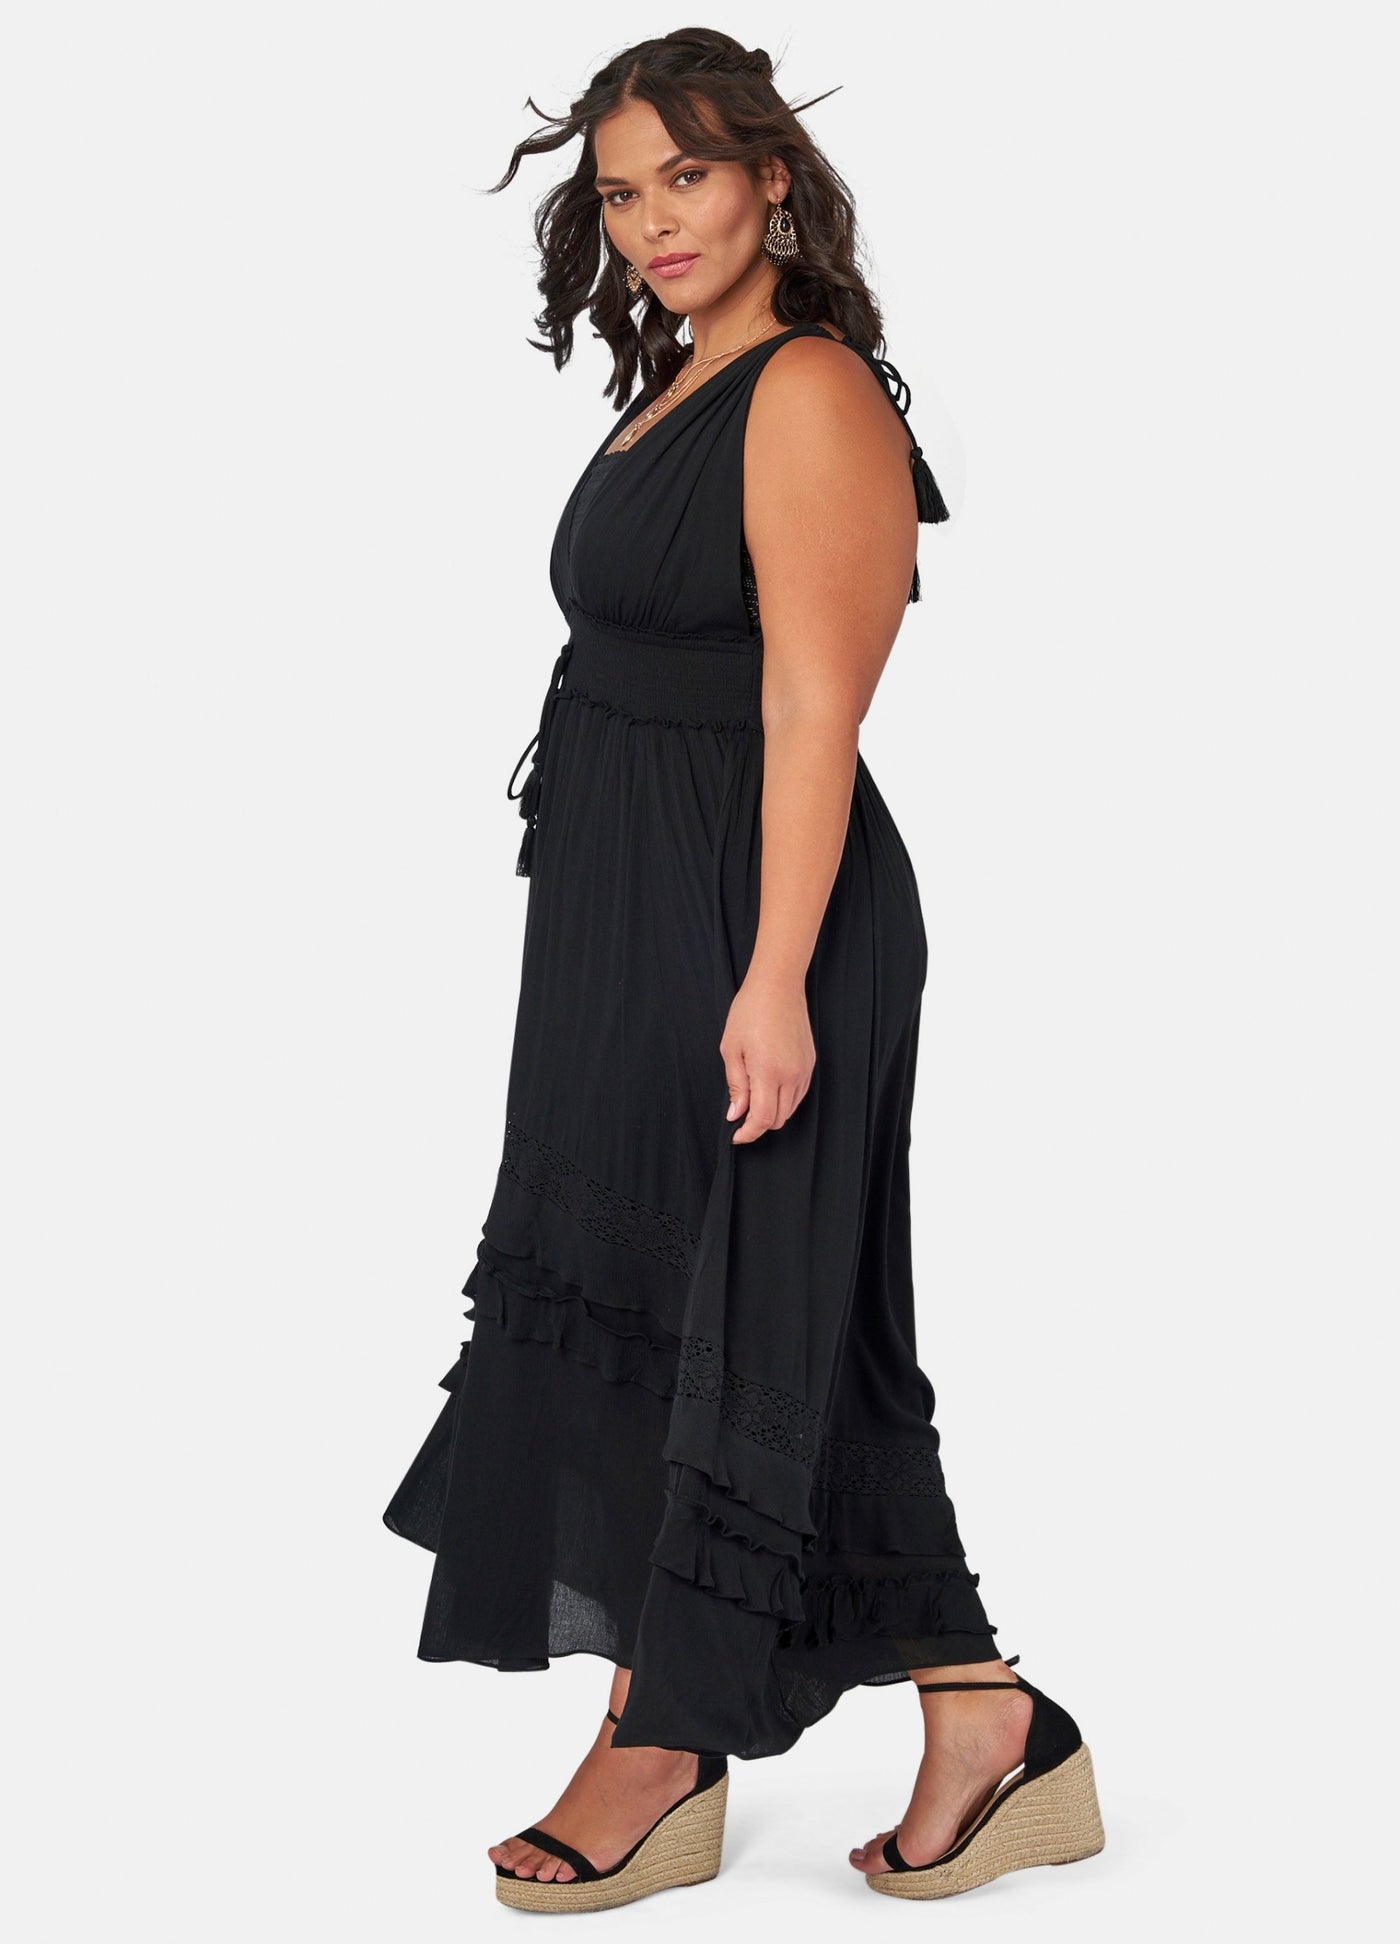 Model wearing the black sunbeam maxi dress